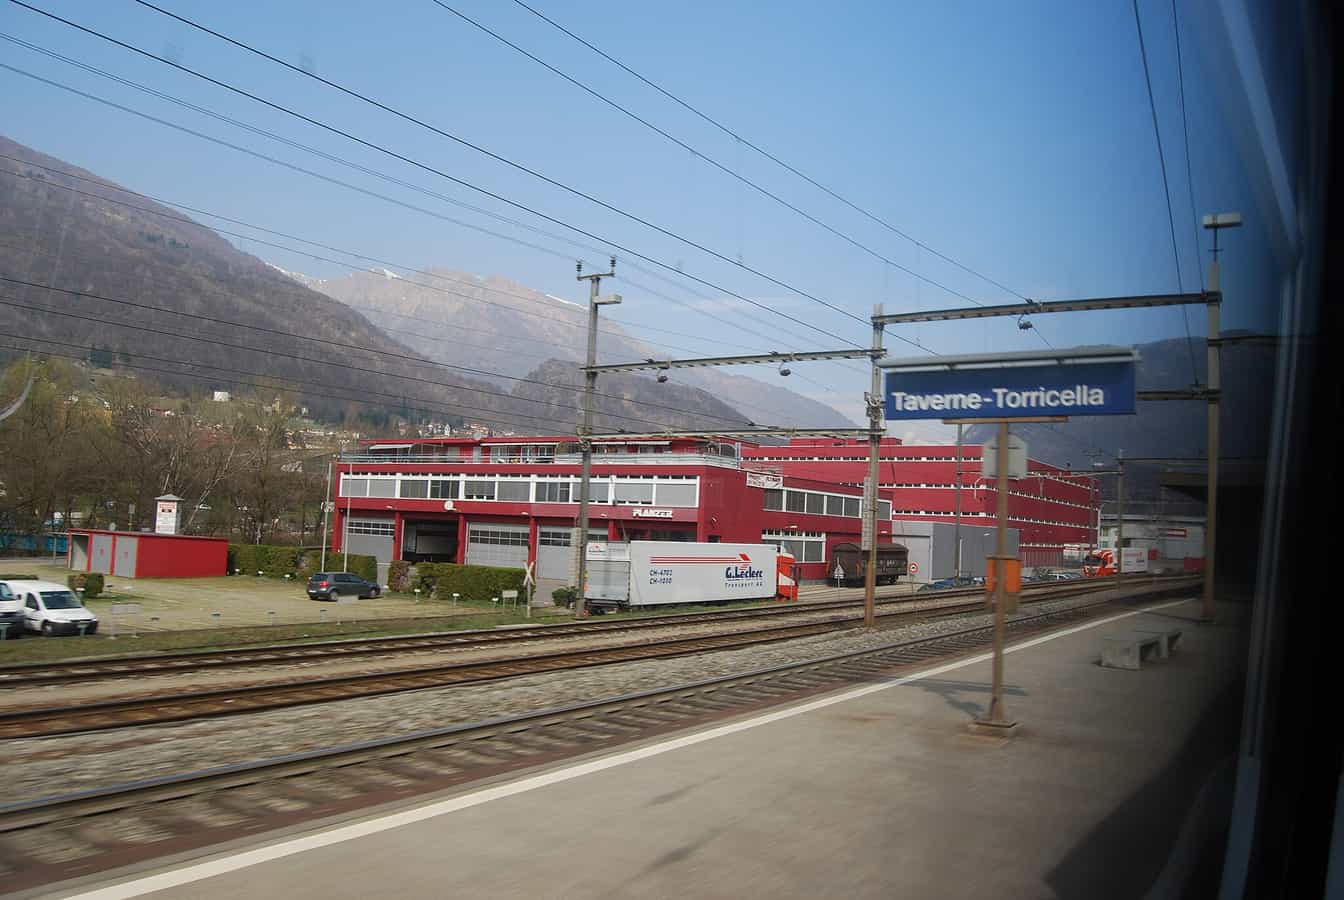 Bahnhof Taverne-Toricella